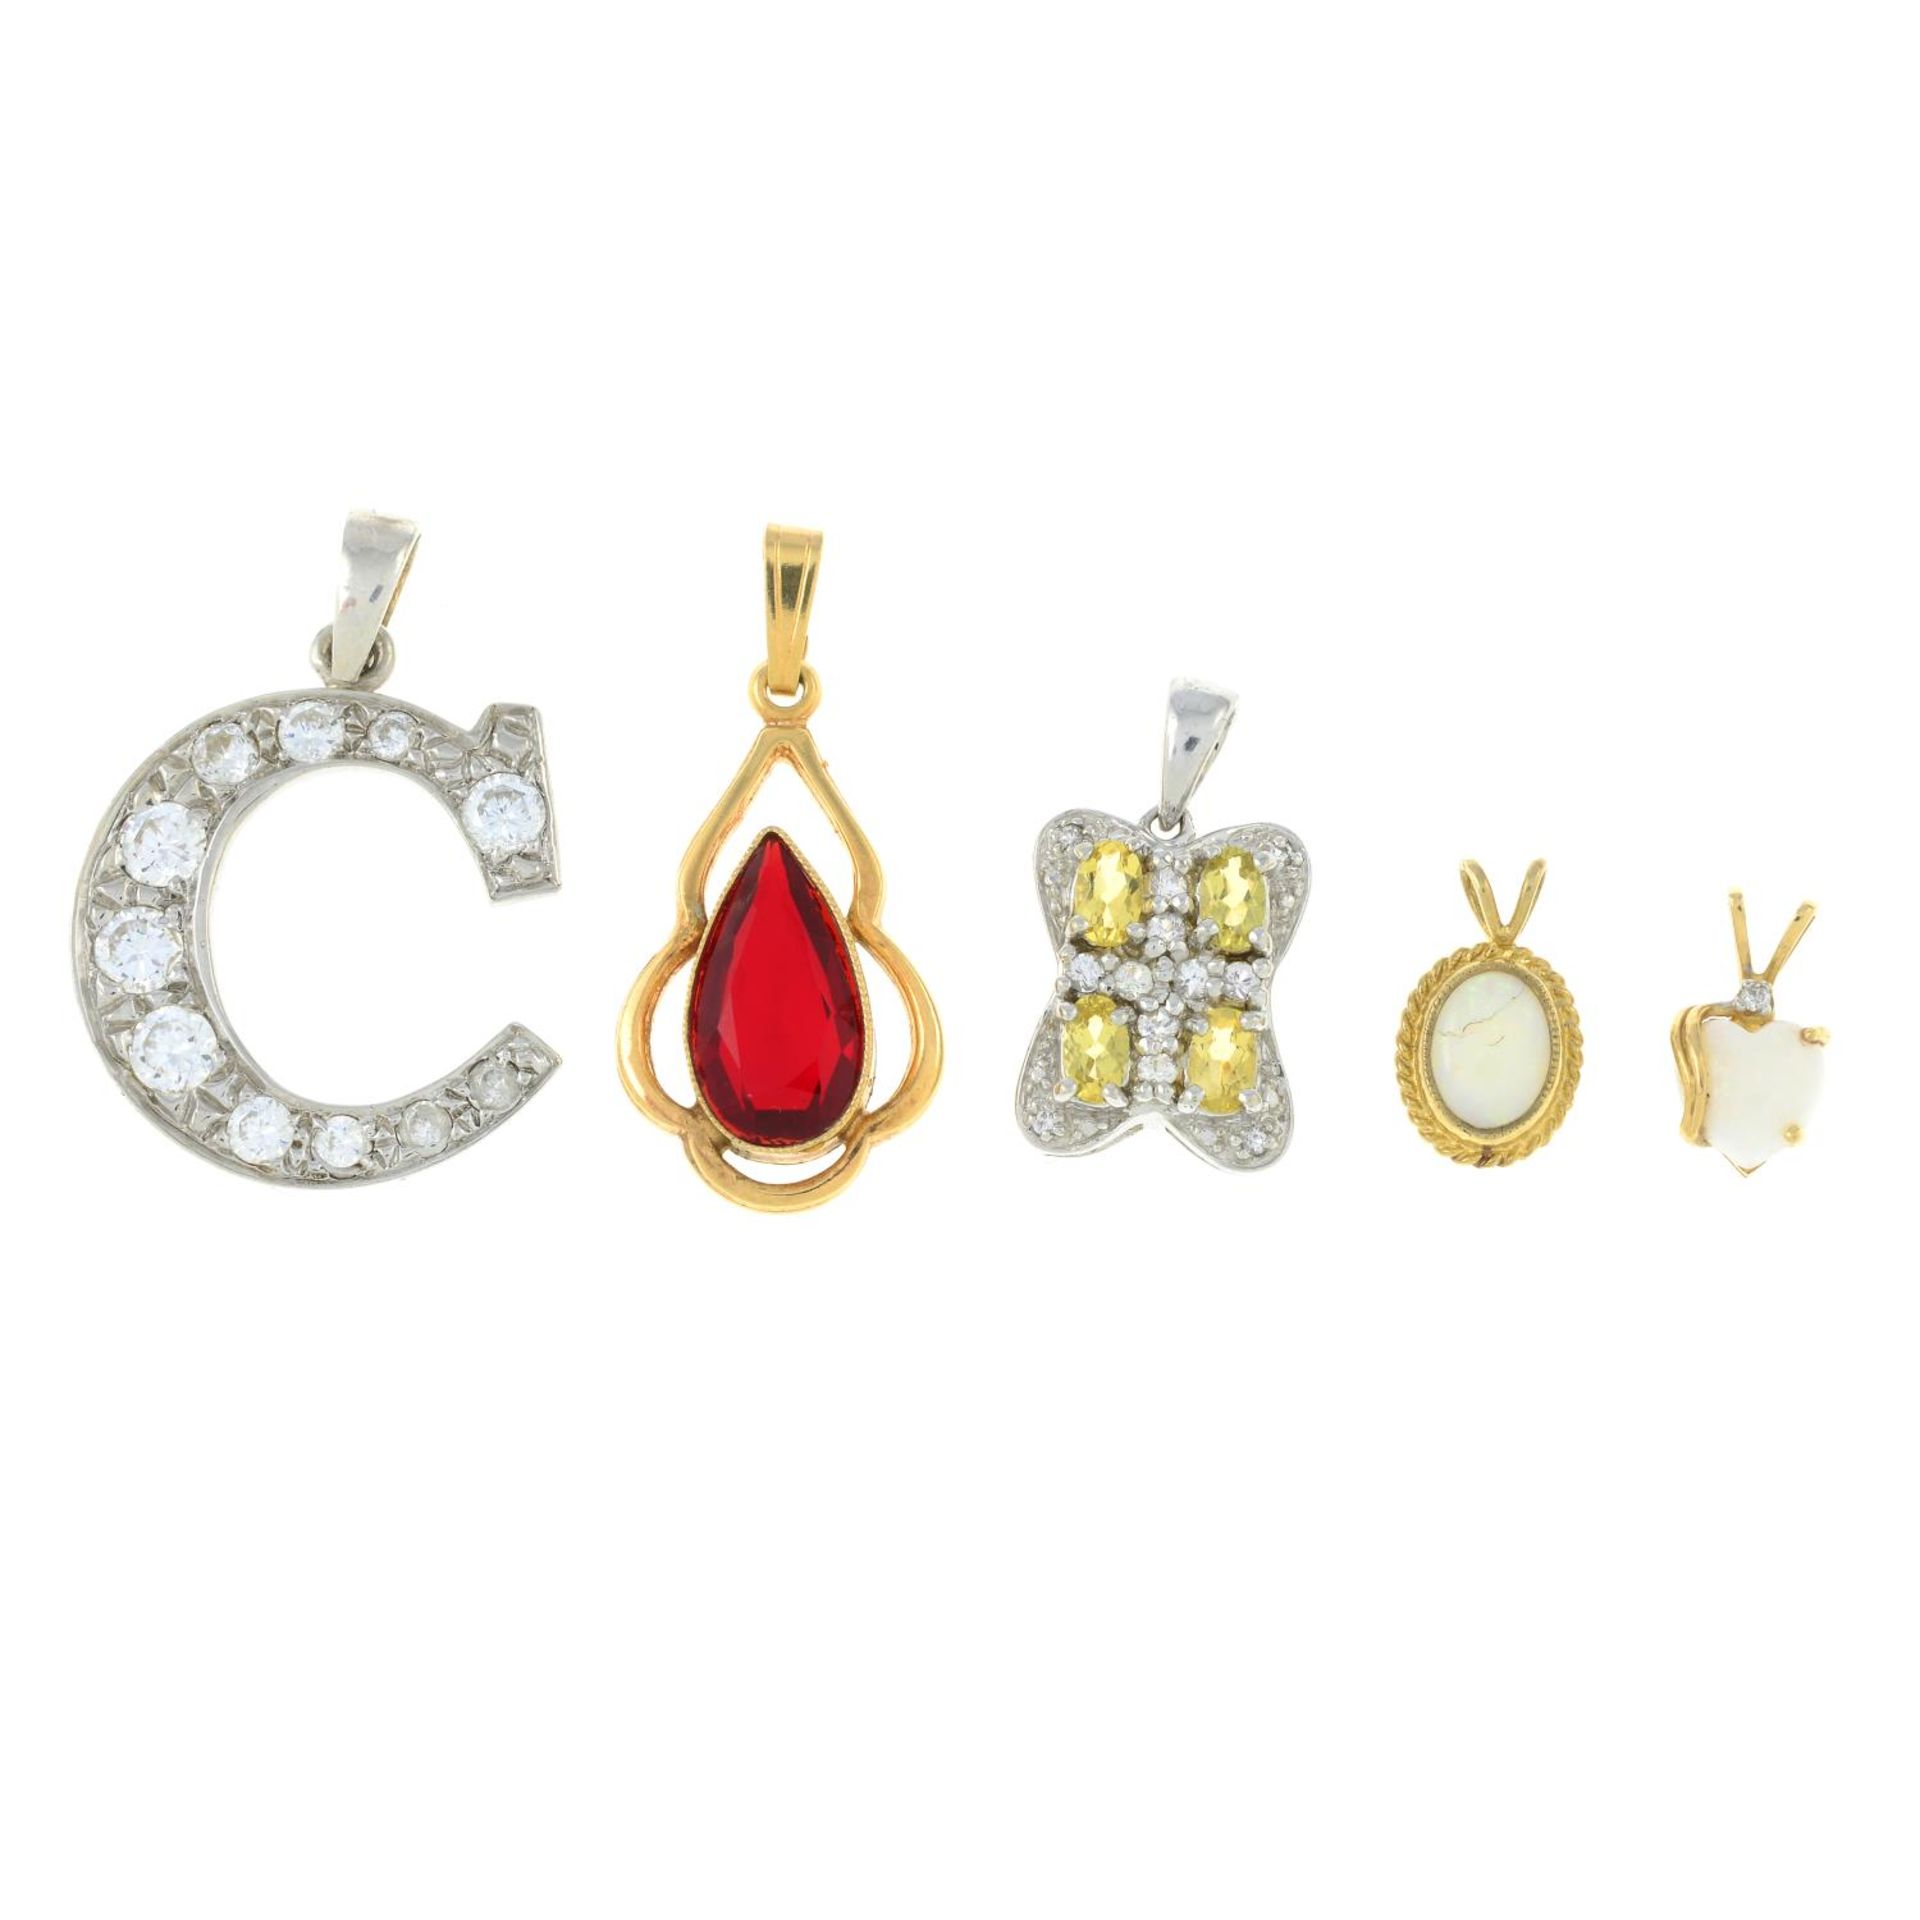 Opal and diamond pendant,